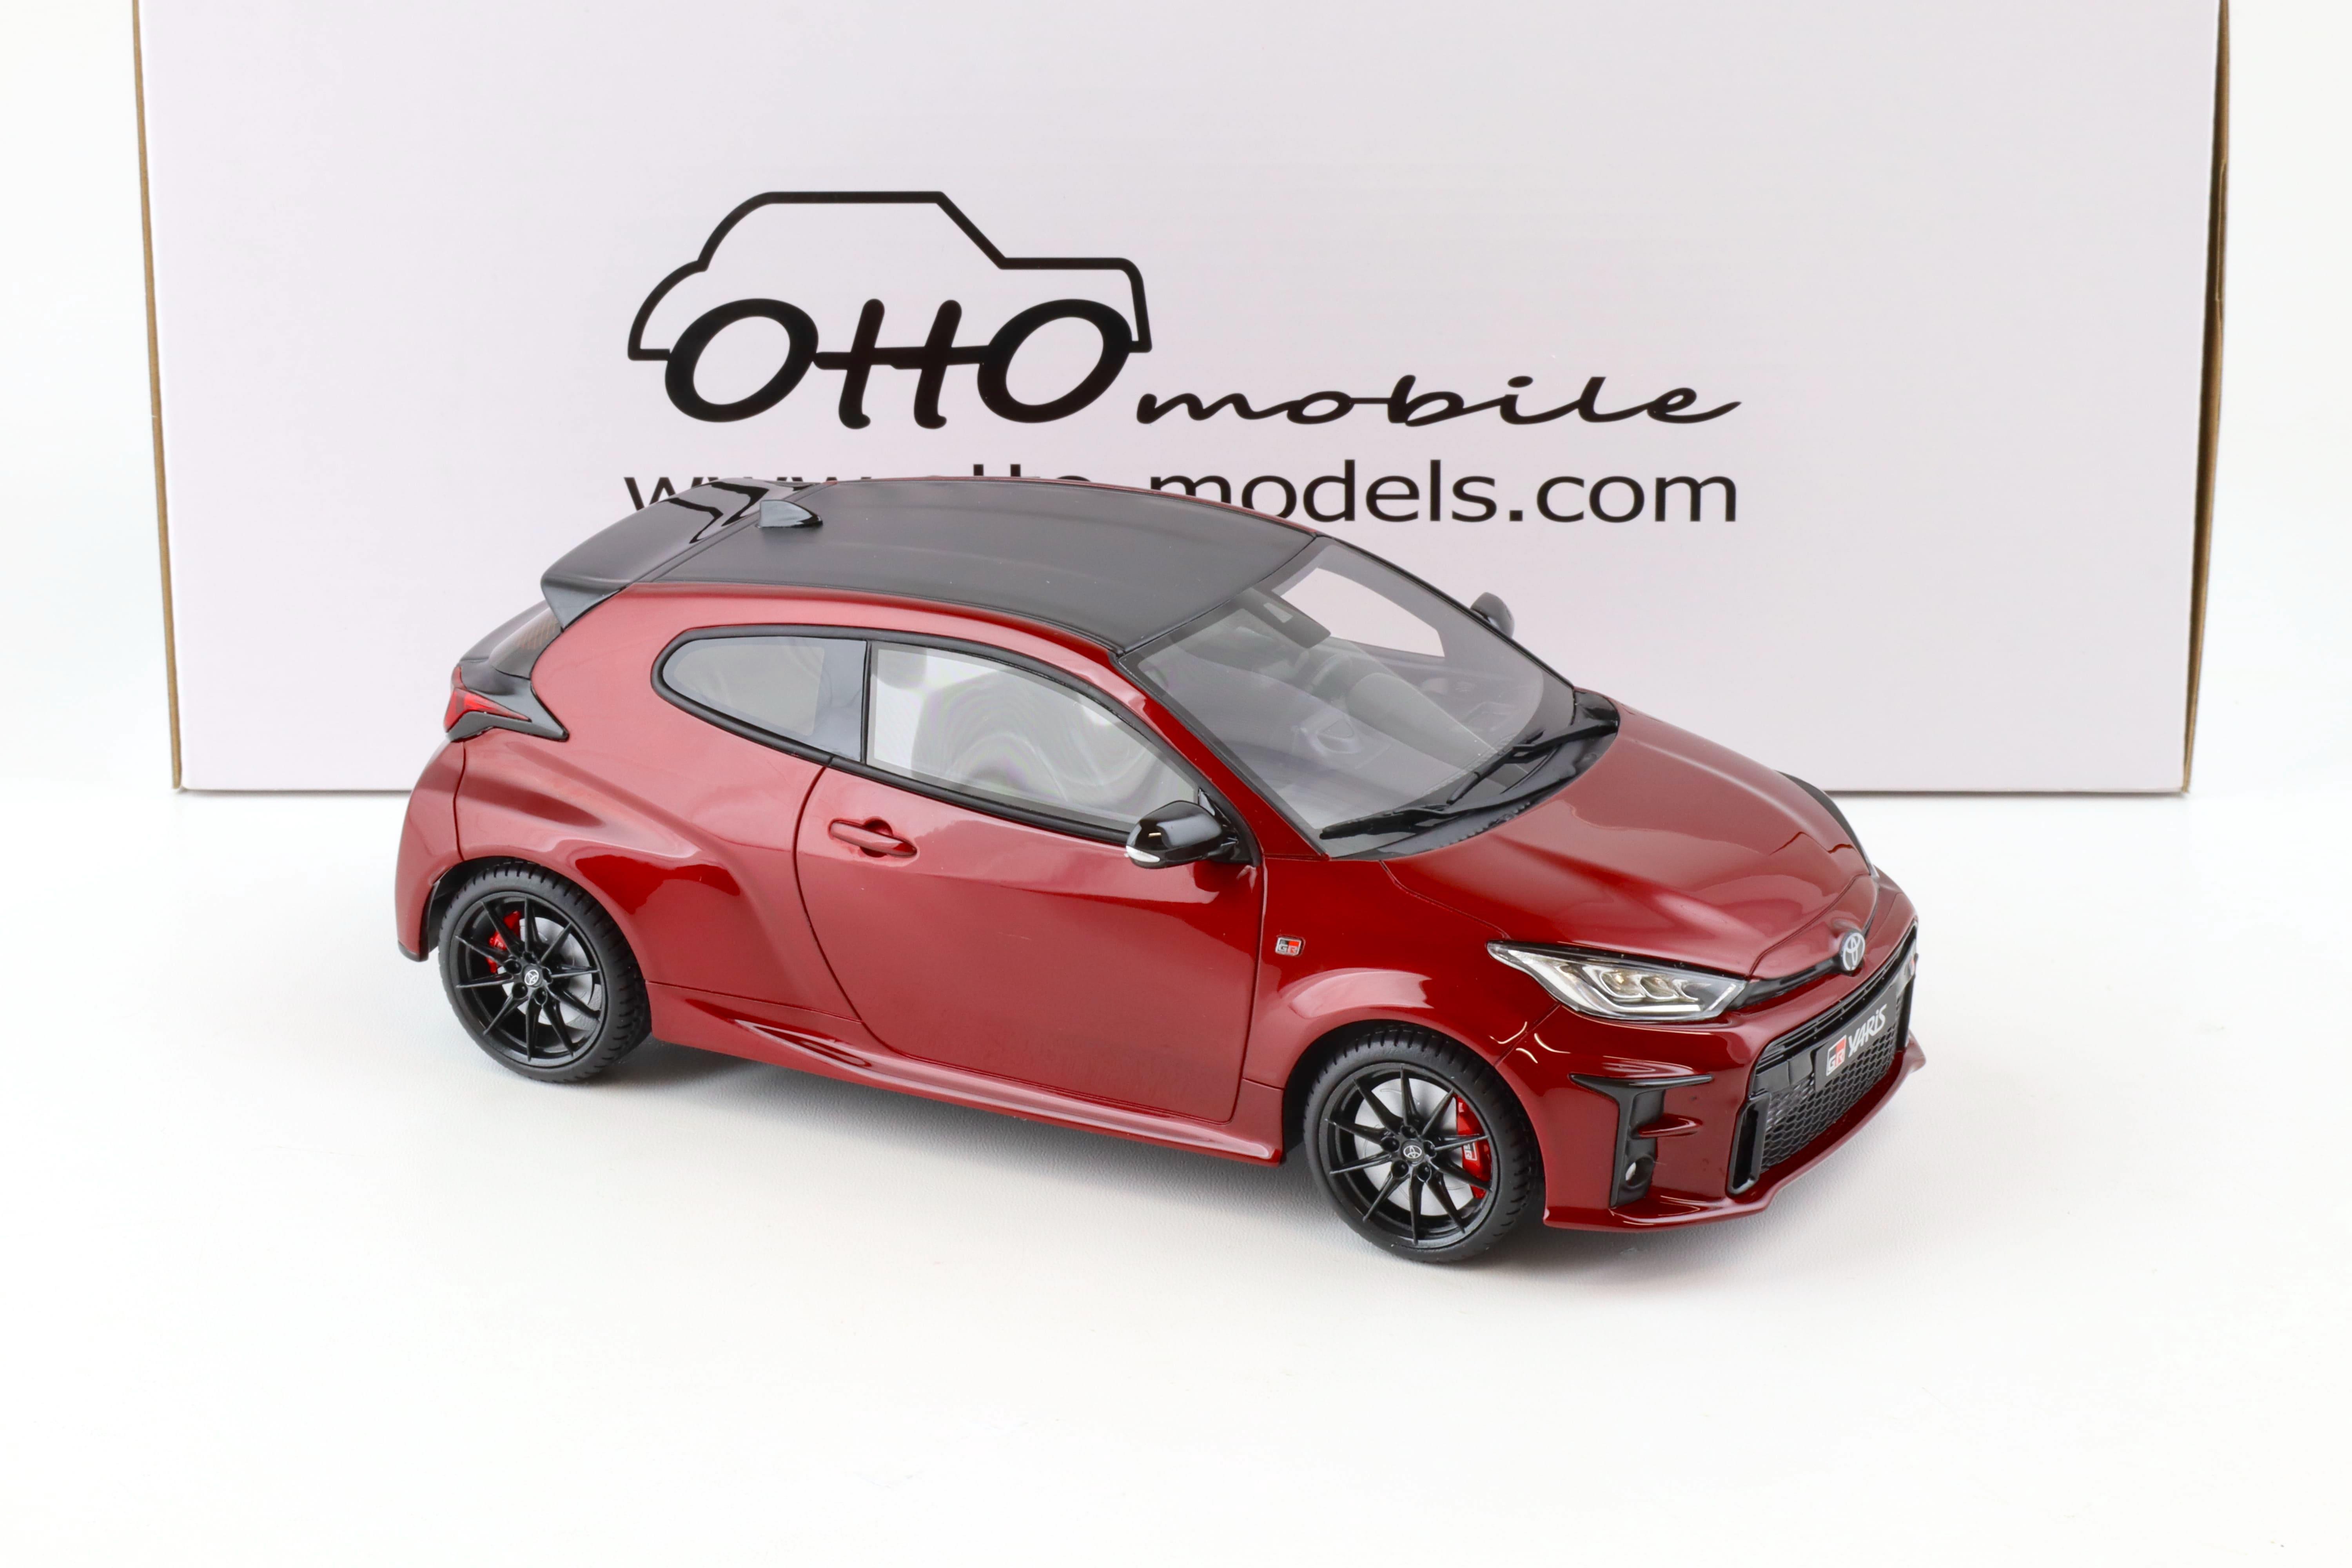 1:18 OTTO mobile OT1003 Toyota Yaris GR red metallic/ black 2021